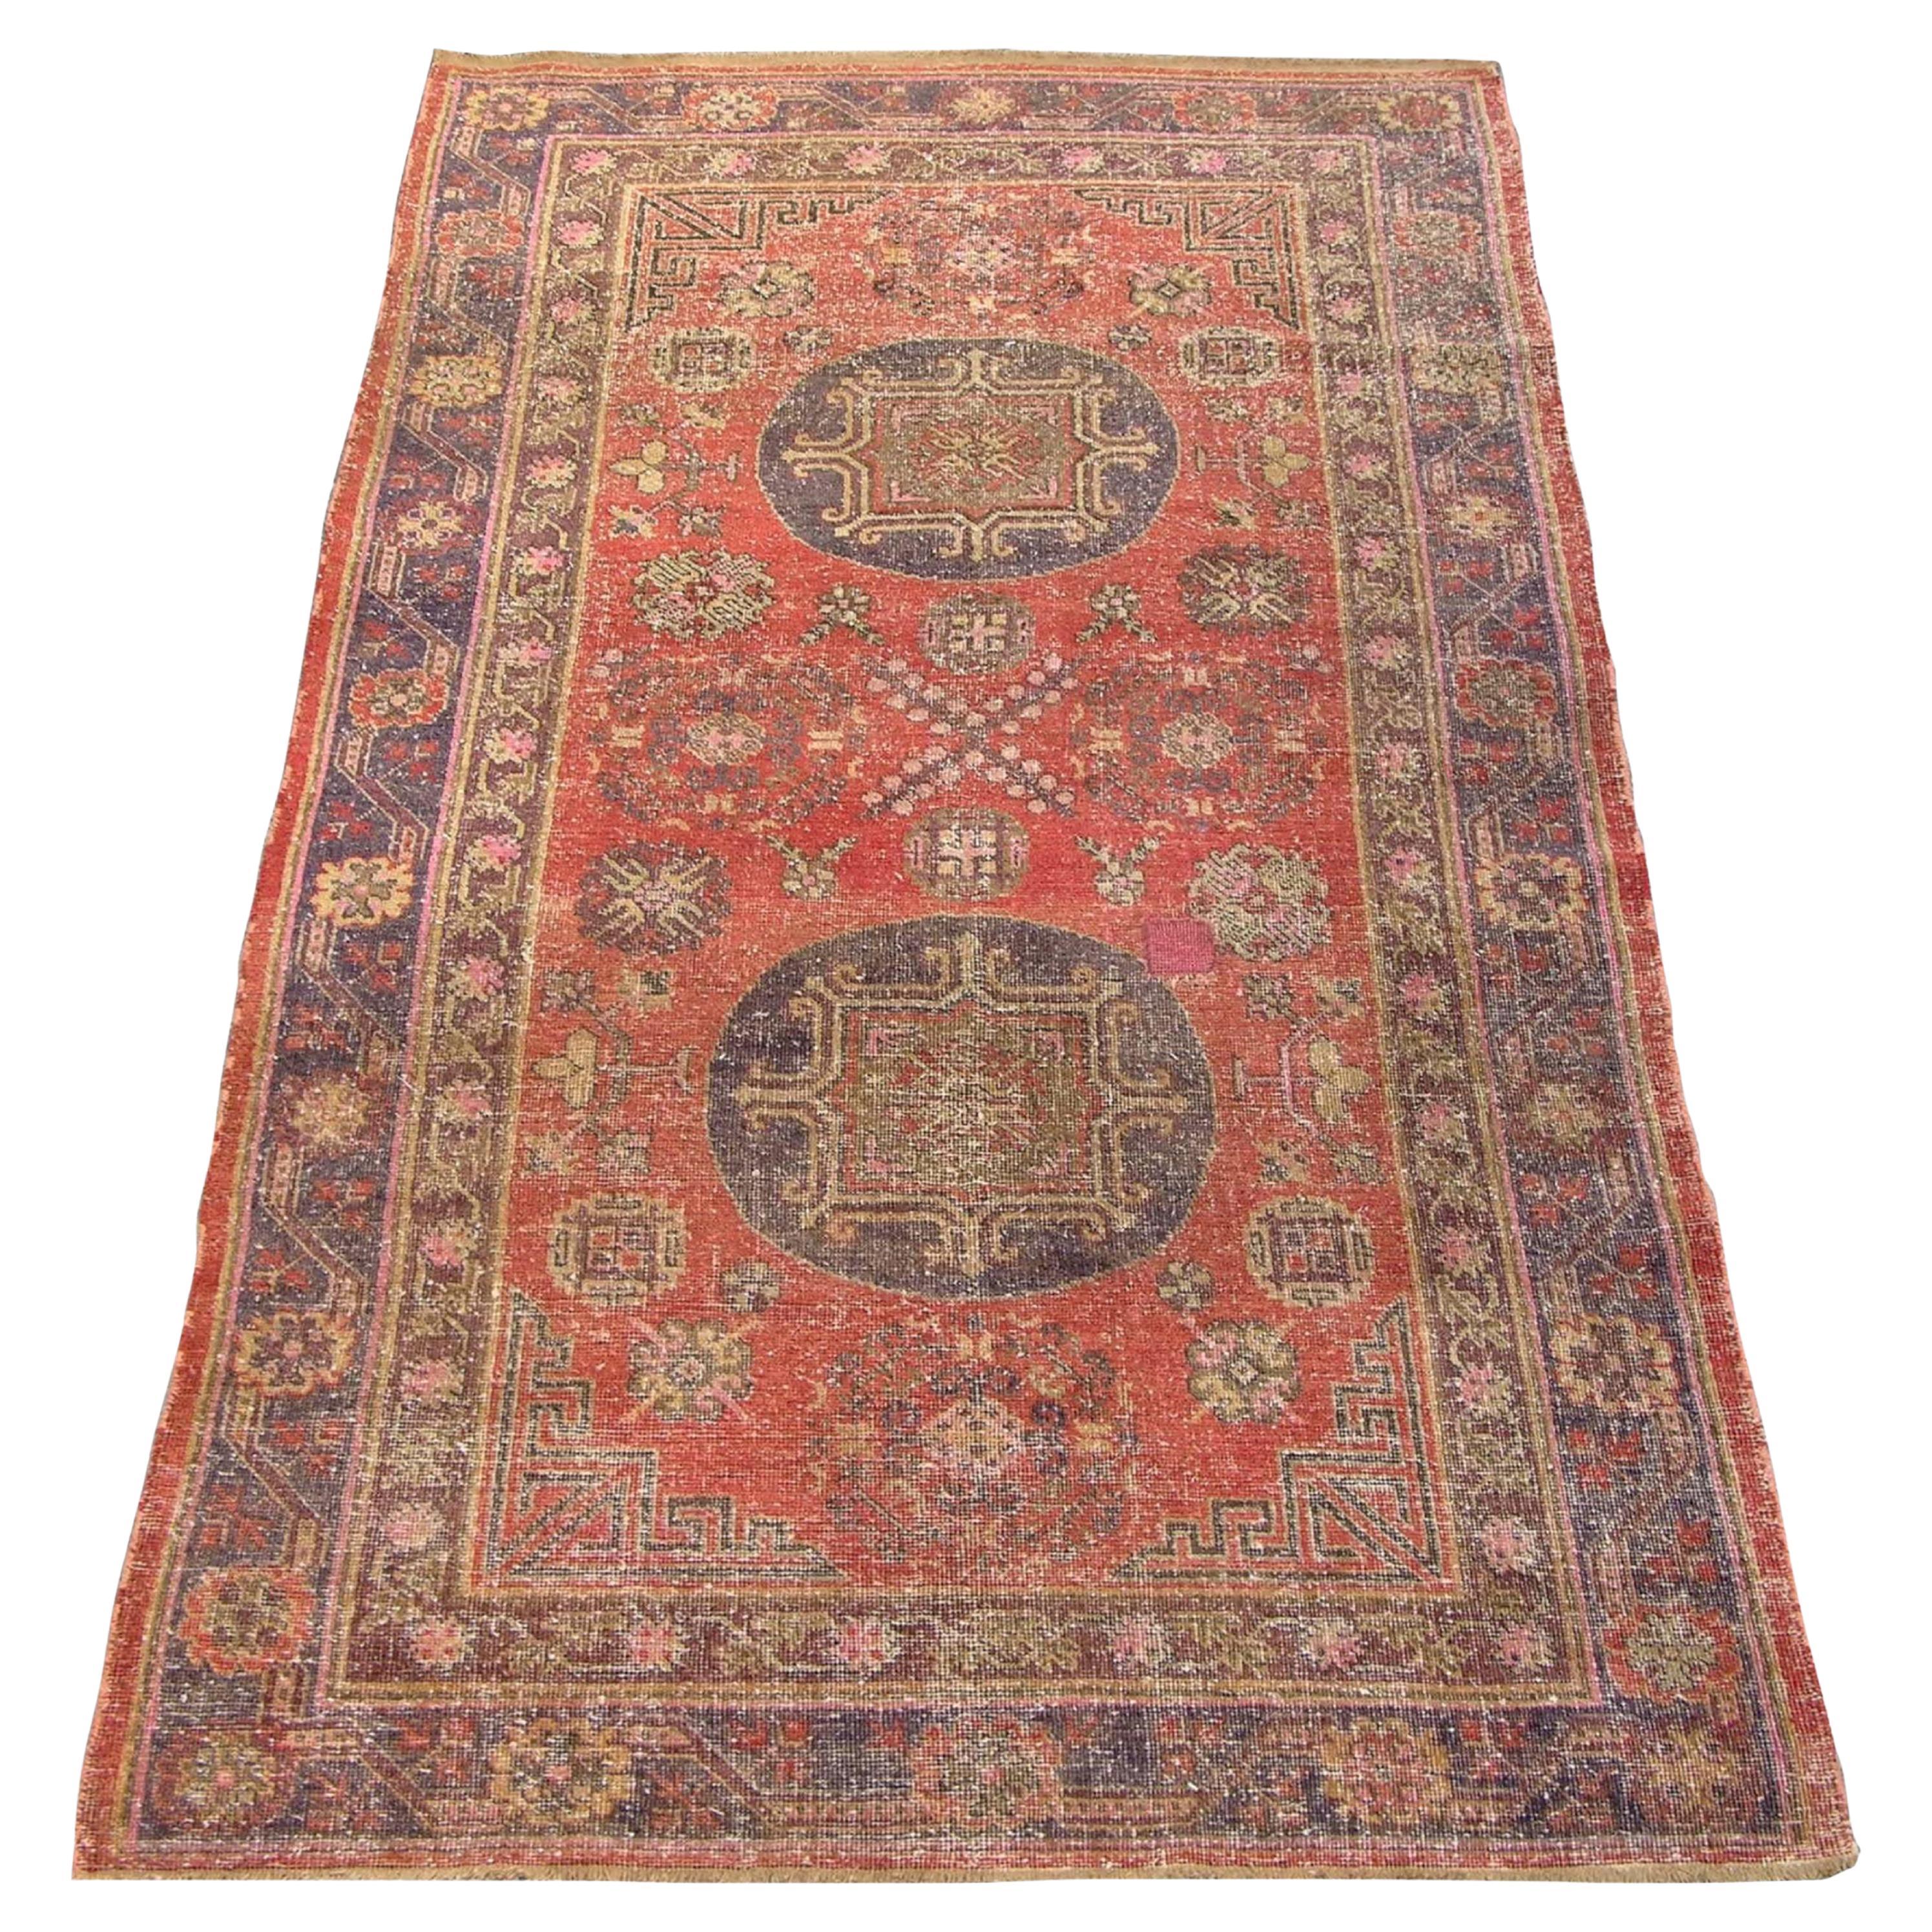 Late-19th Century Authentic Khotan Samarkand Rug For Sale